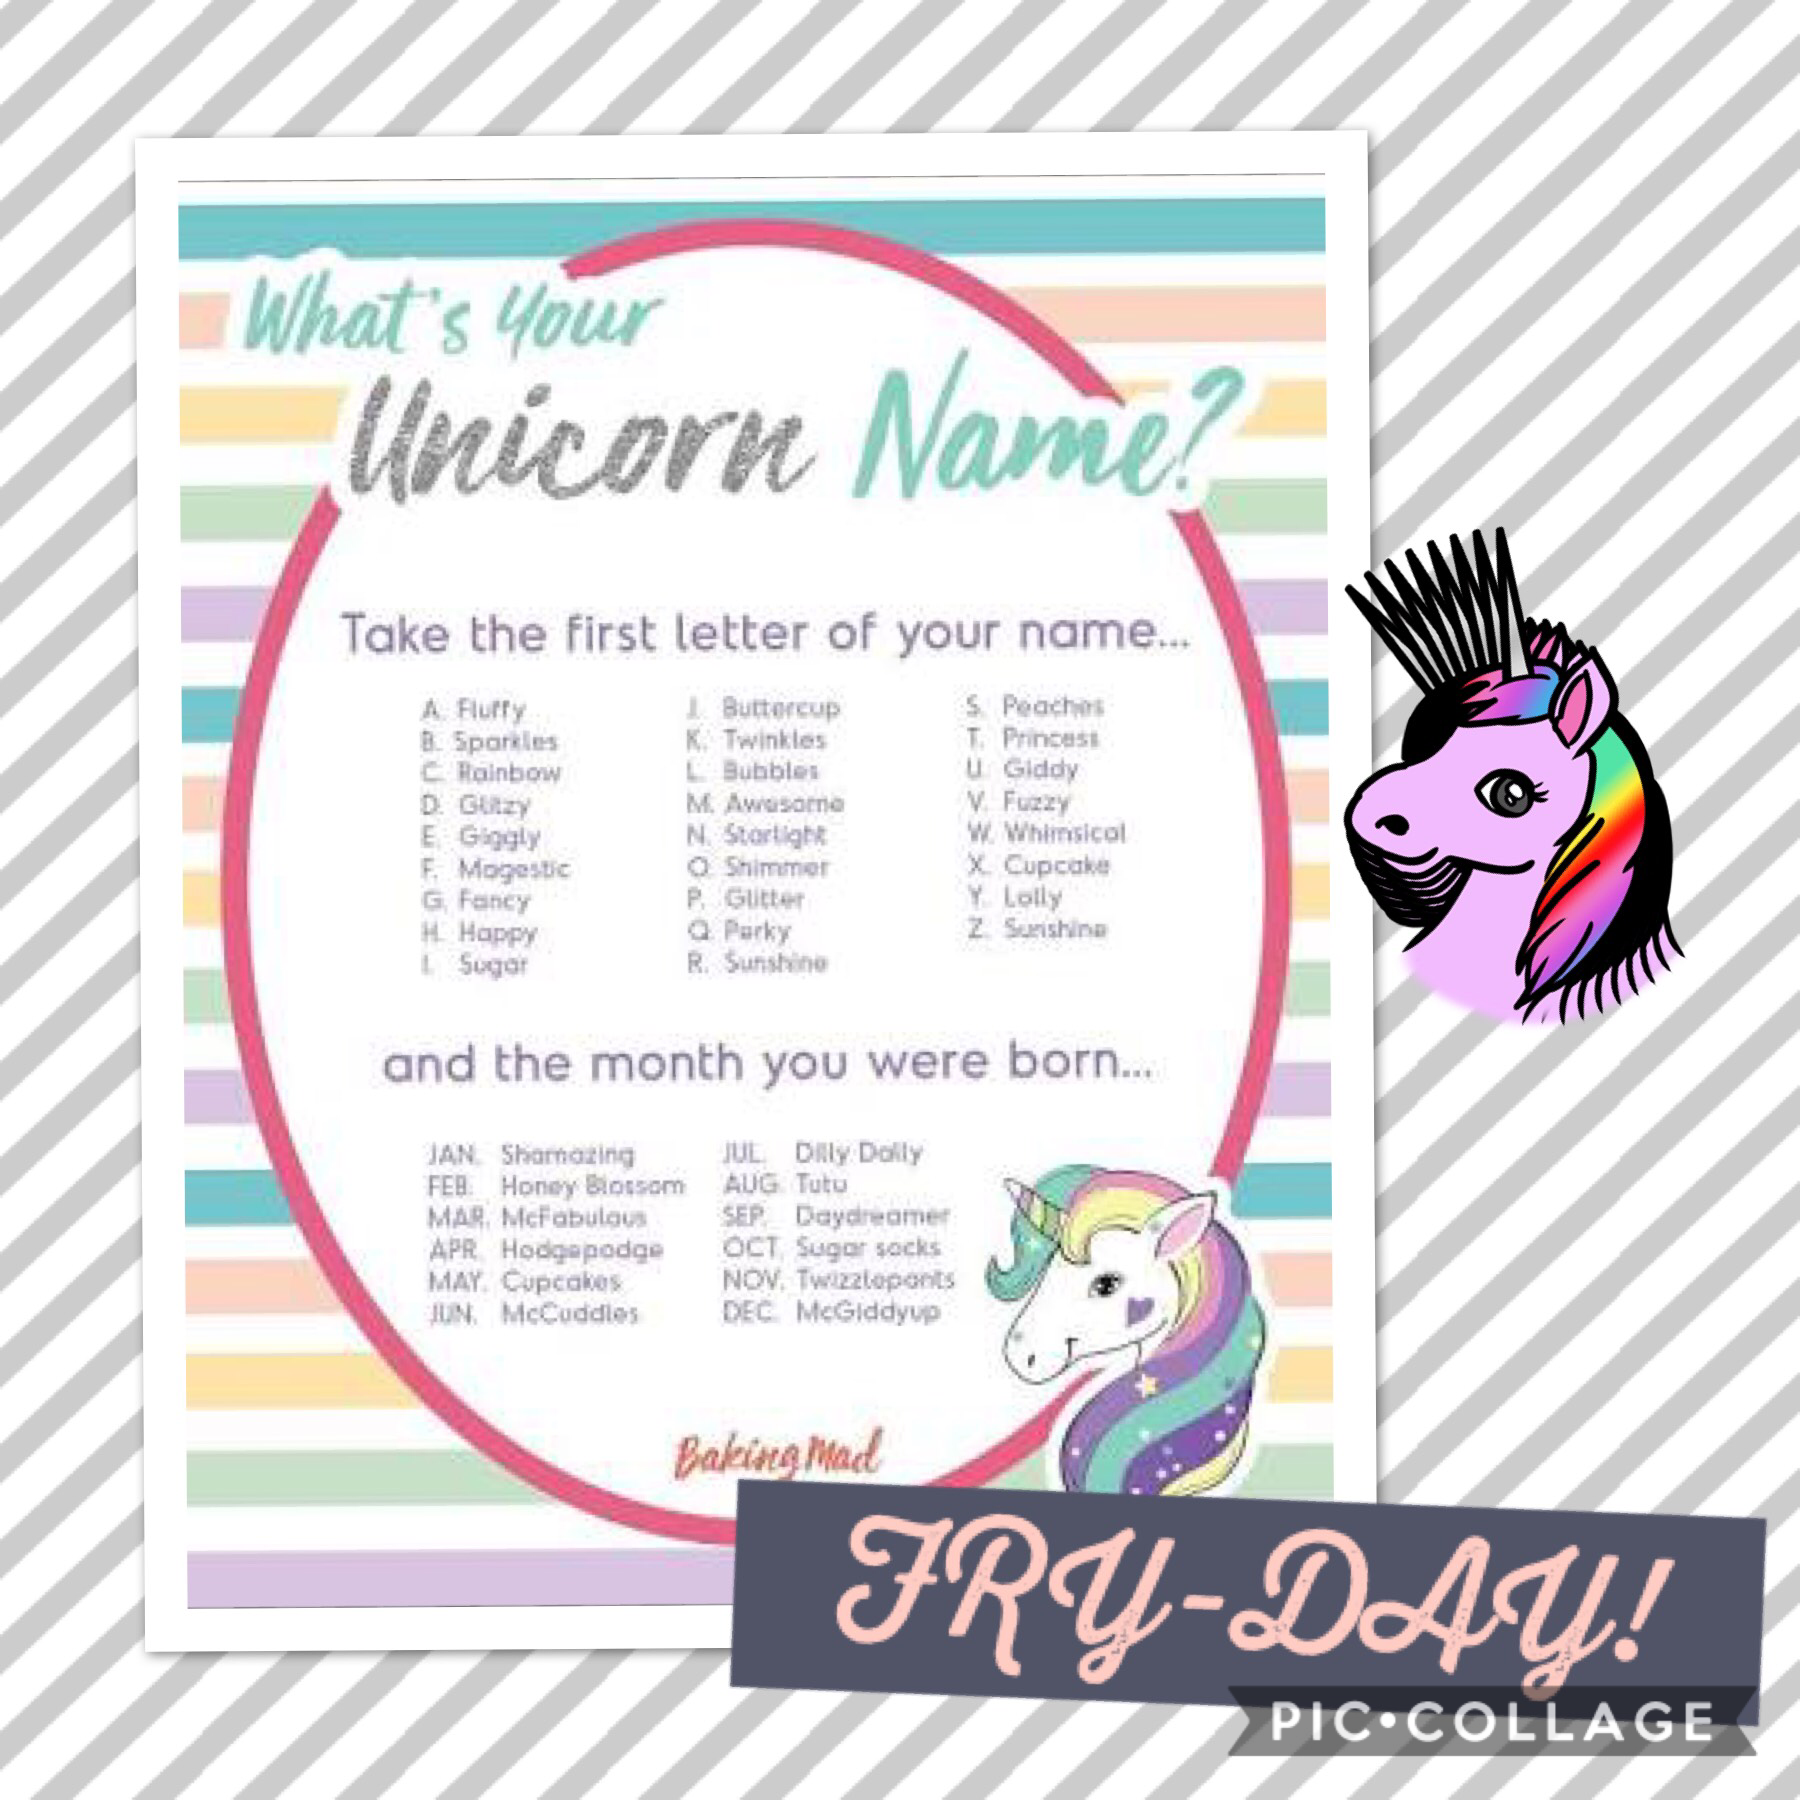 What’s ur unicorn name??